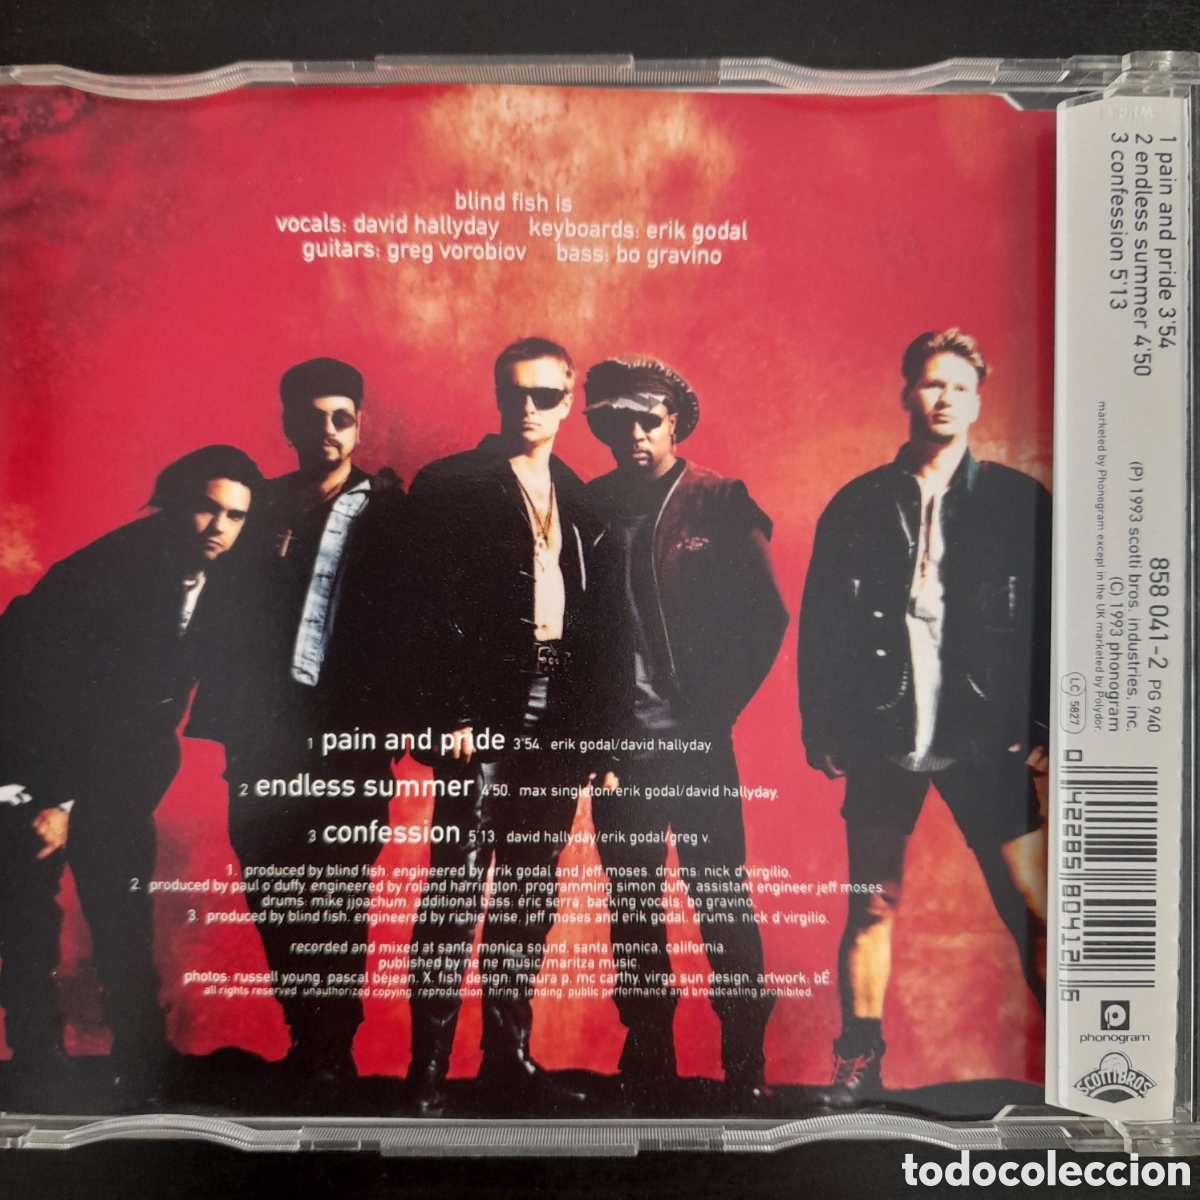 blind fish featuring david hallyday – pain and - Acheter CD de musique rock  sur todocoleccion